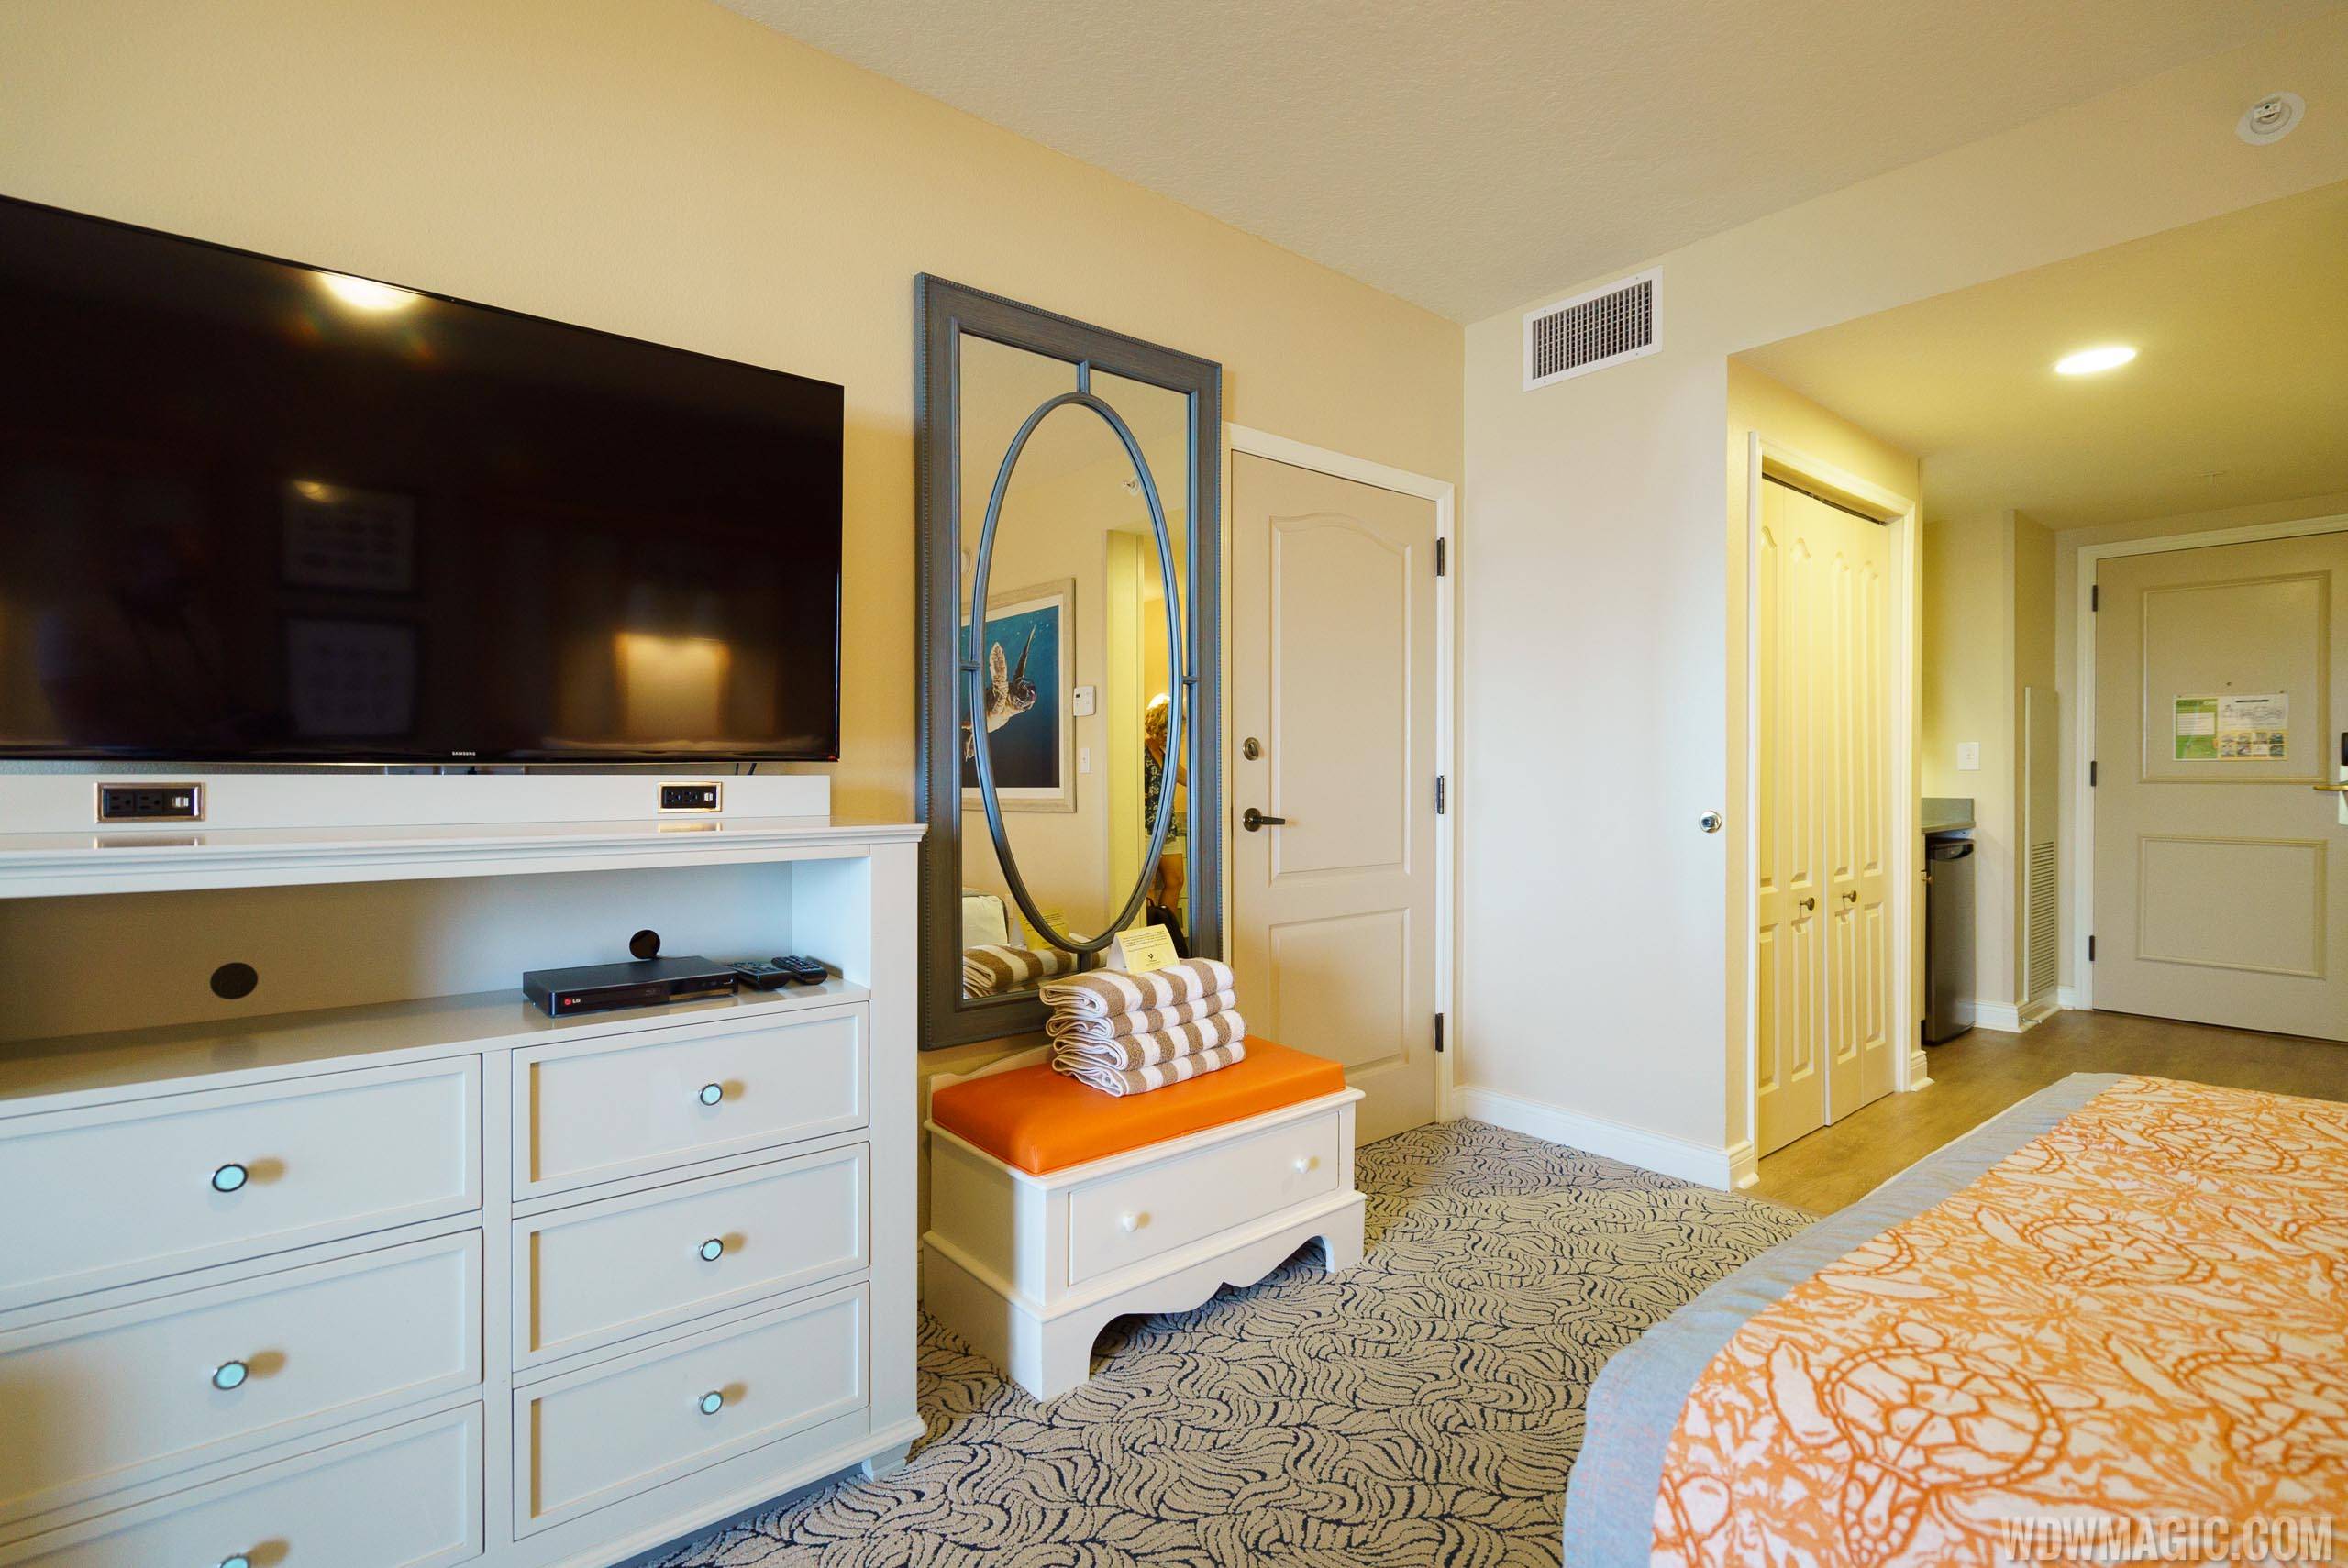 Newly refurbished Ocean View Inn Room at Disney's Vero Beach